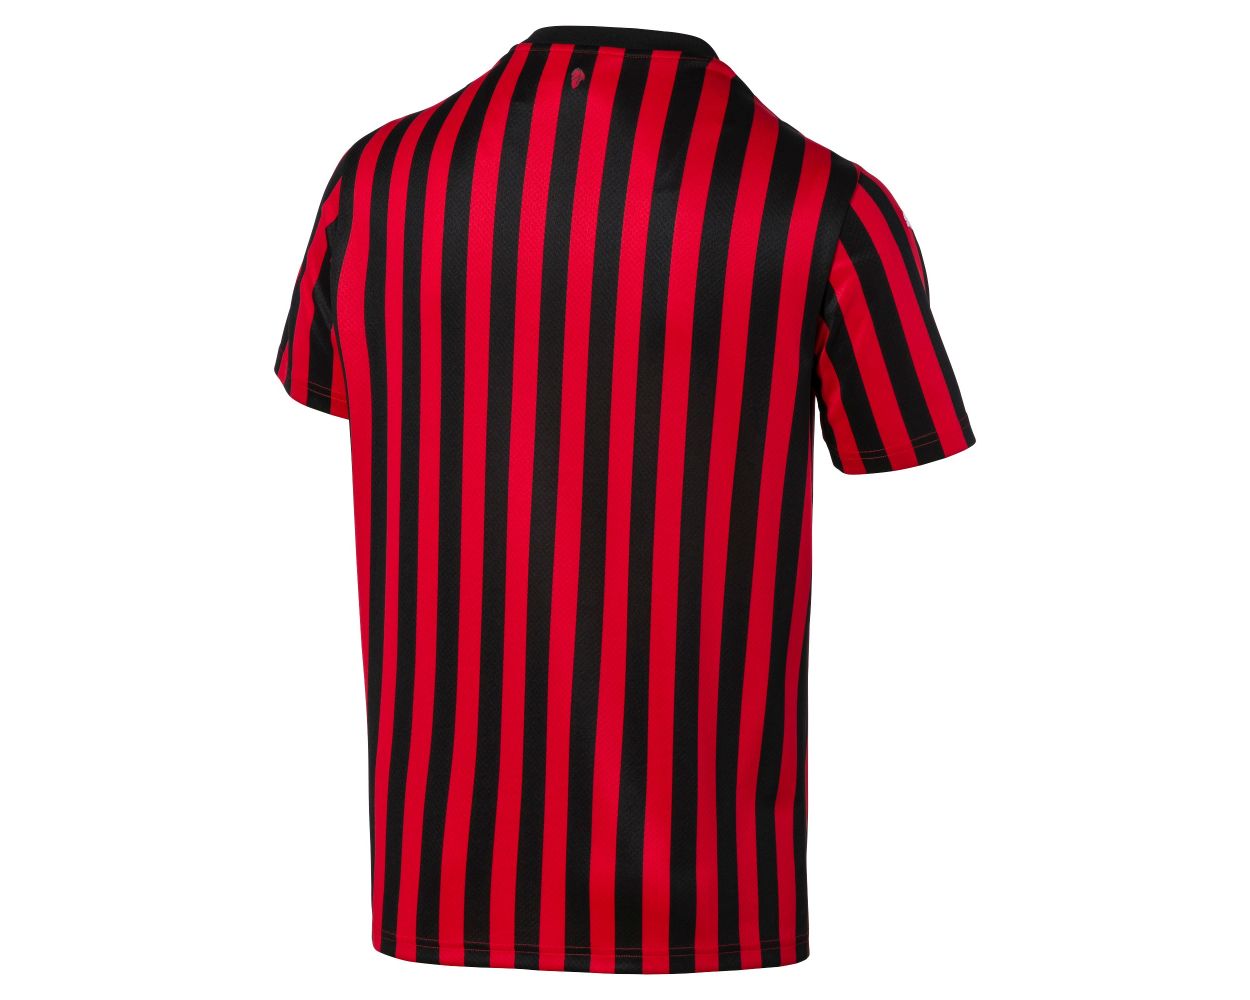 AC Milan Personalized Away Soccer Club Jersey